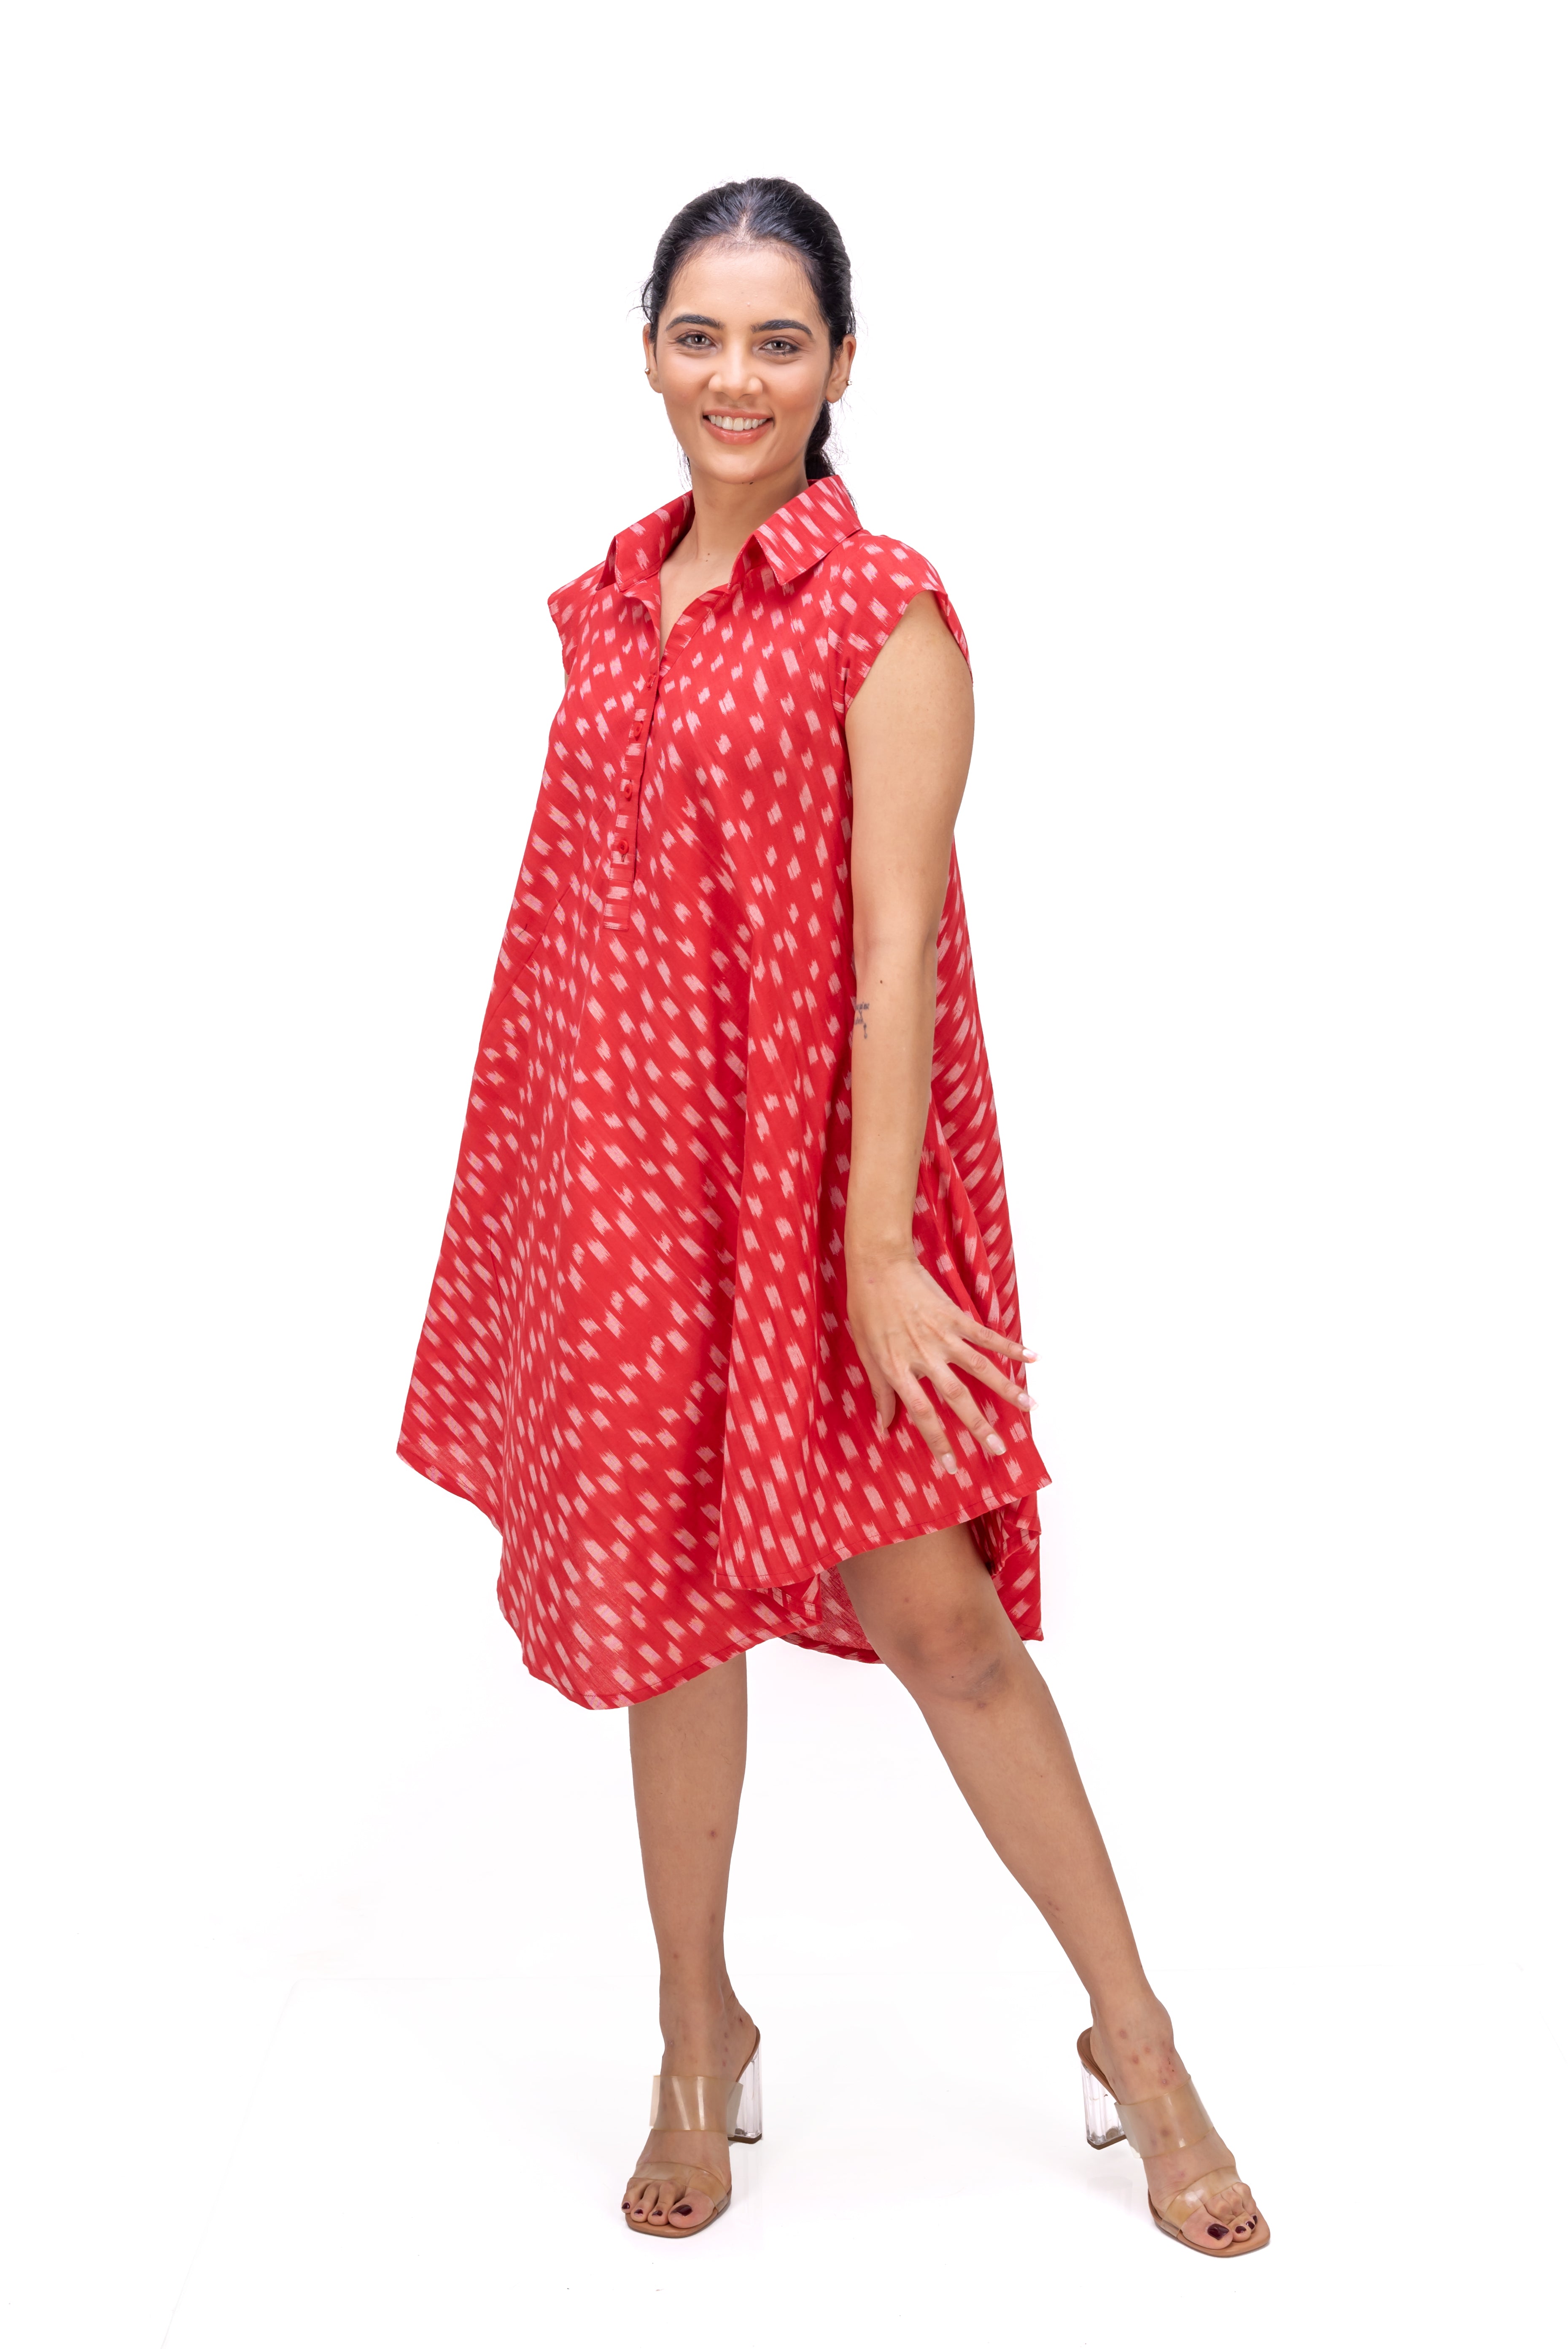 586-321 "New York" Women's Samosa Dress